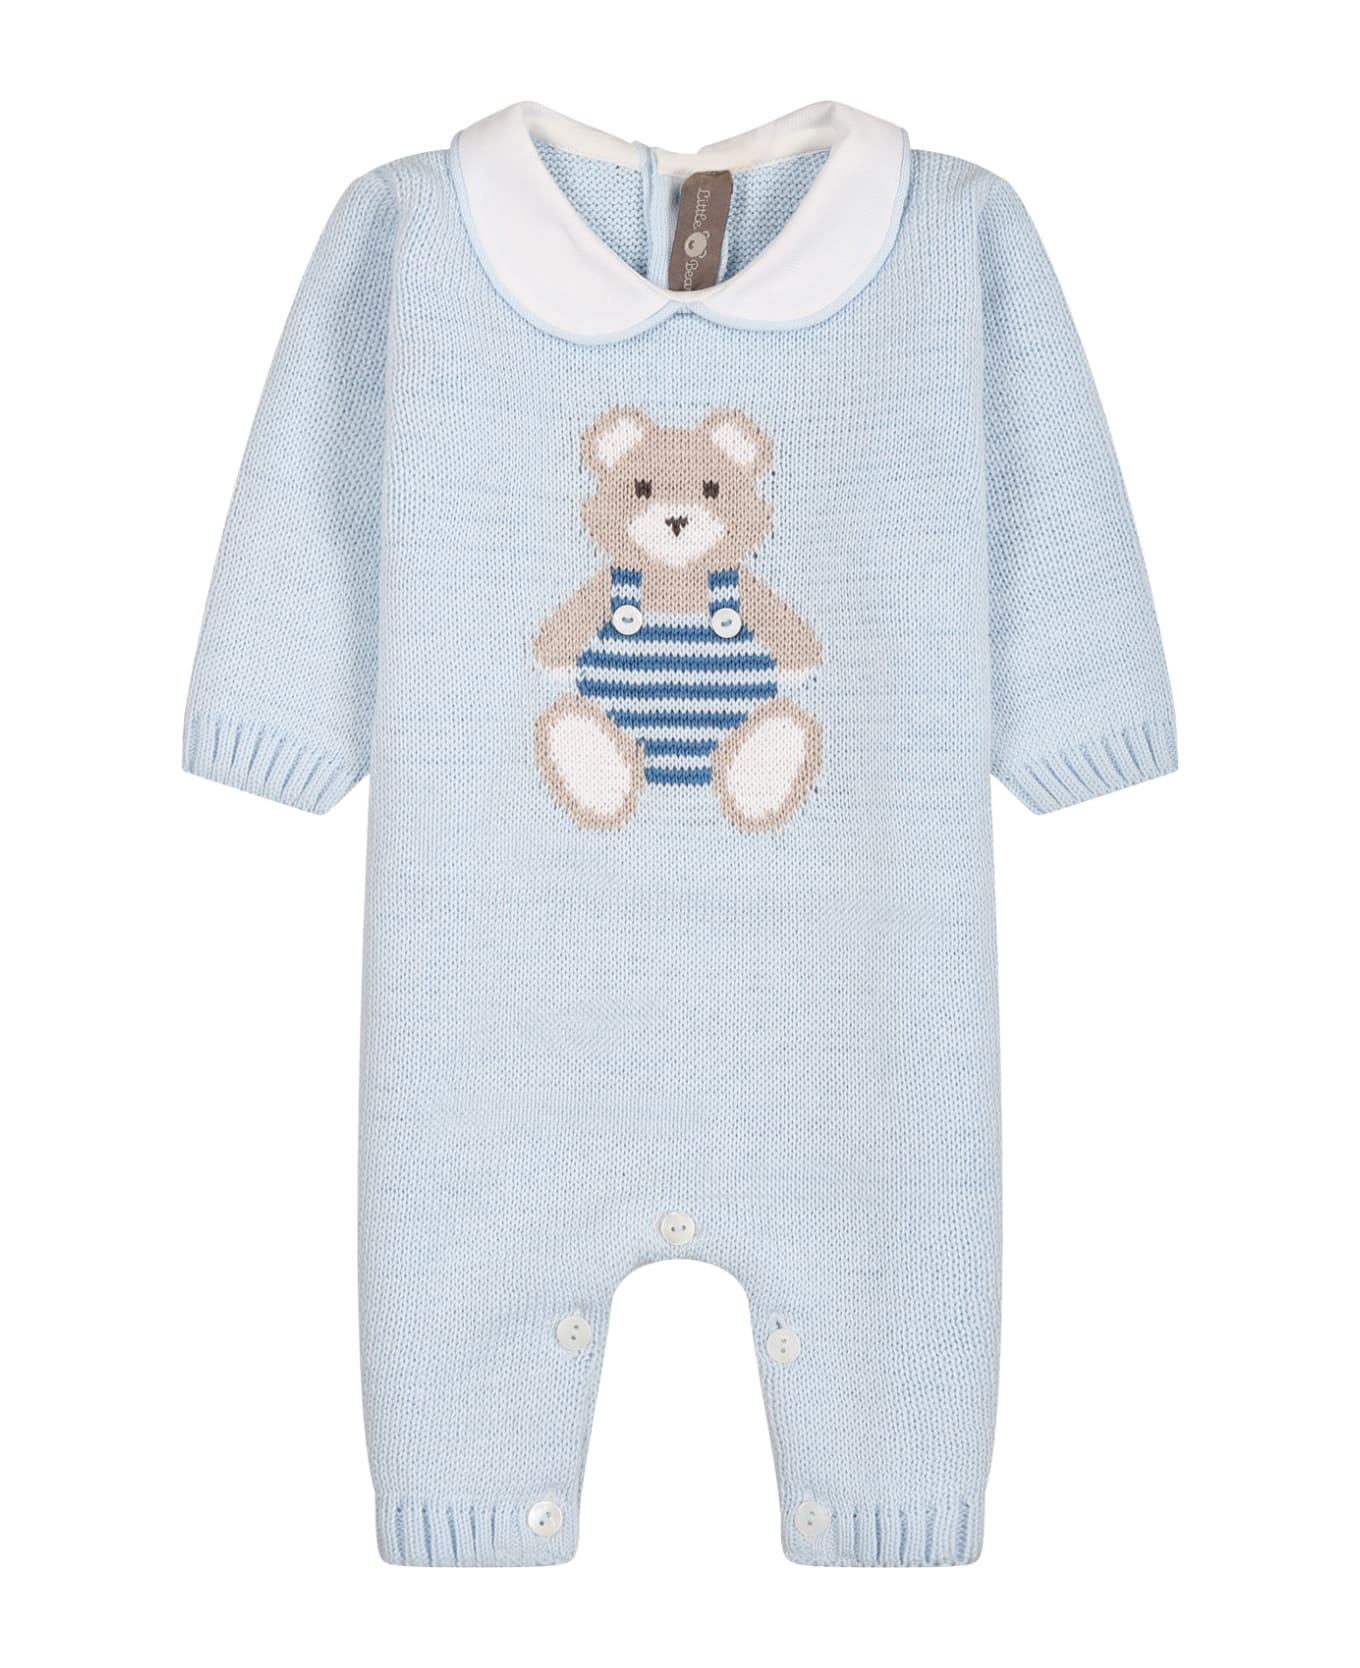 Little Bear Light Blue Romper For Baby Boy With Bear - Cielo